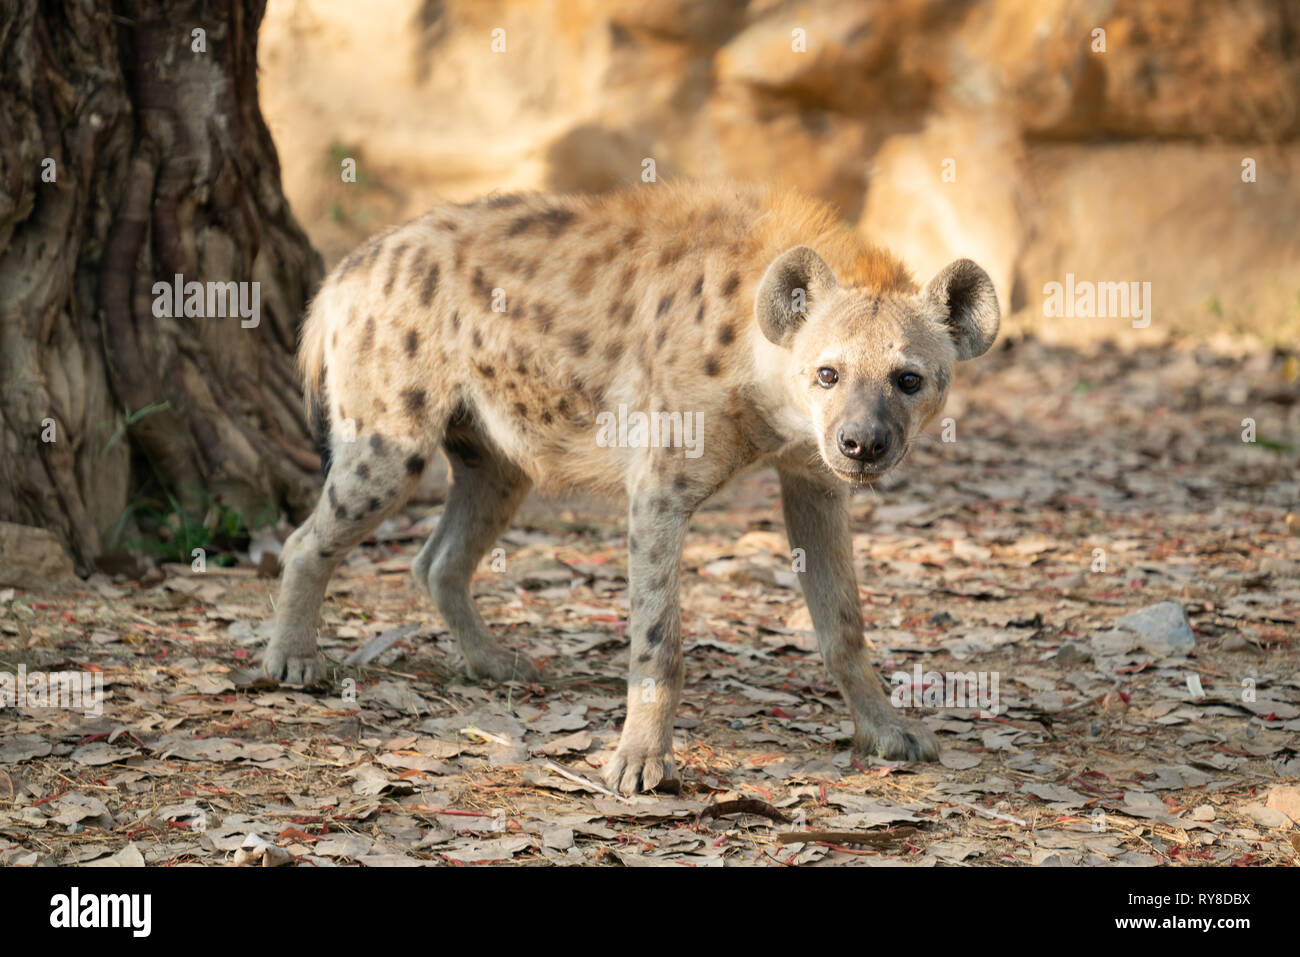 spotted hyena (Crocuta crocuta) in captive environment Stock Photo